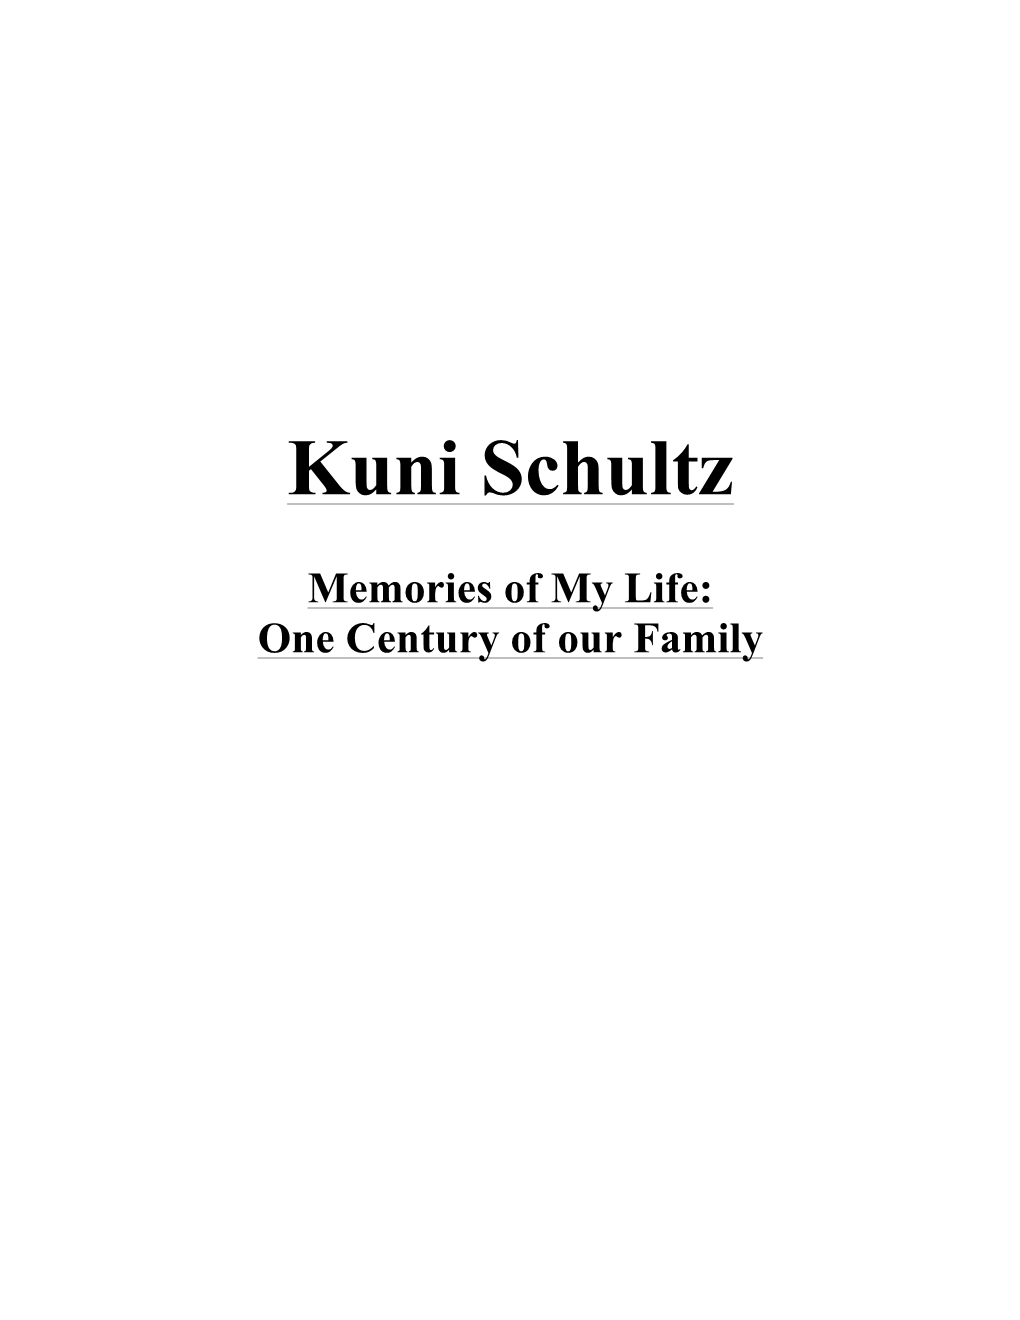 Kuni Shultz Final Draft